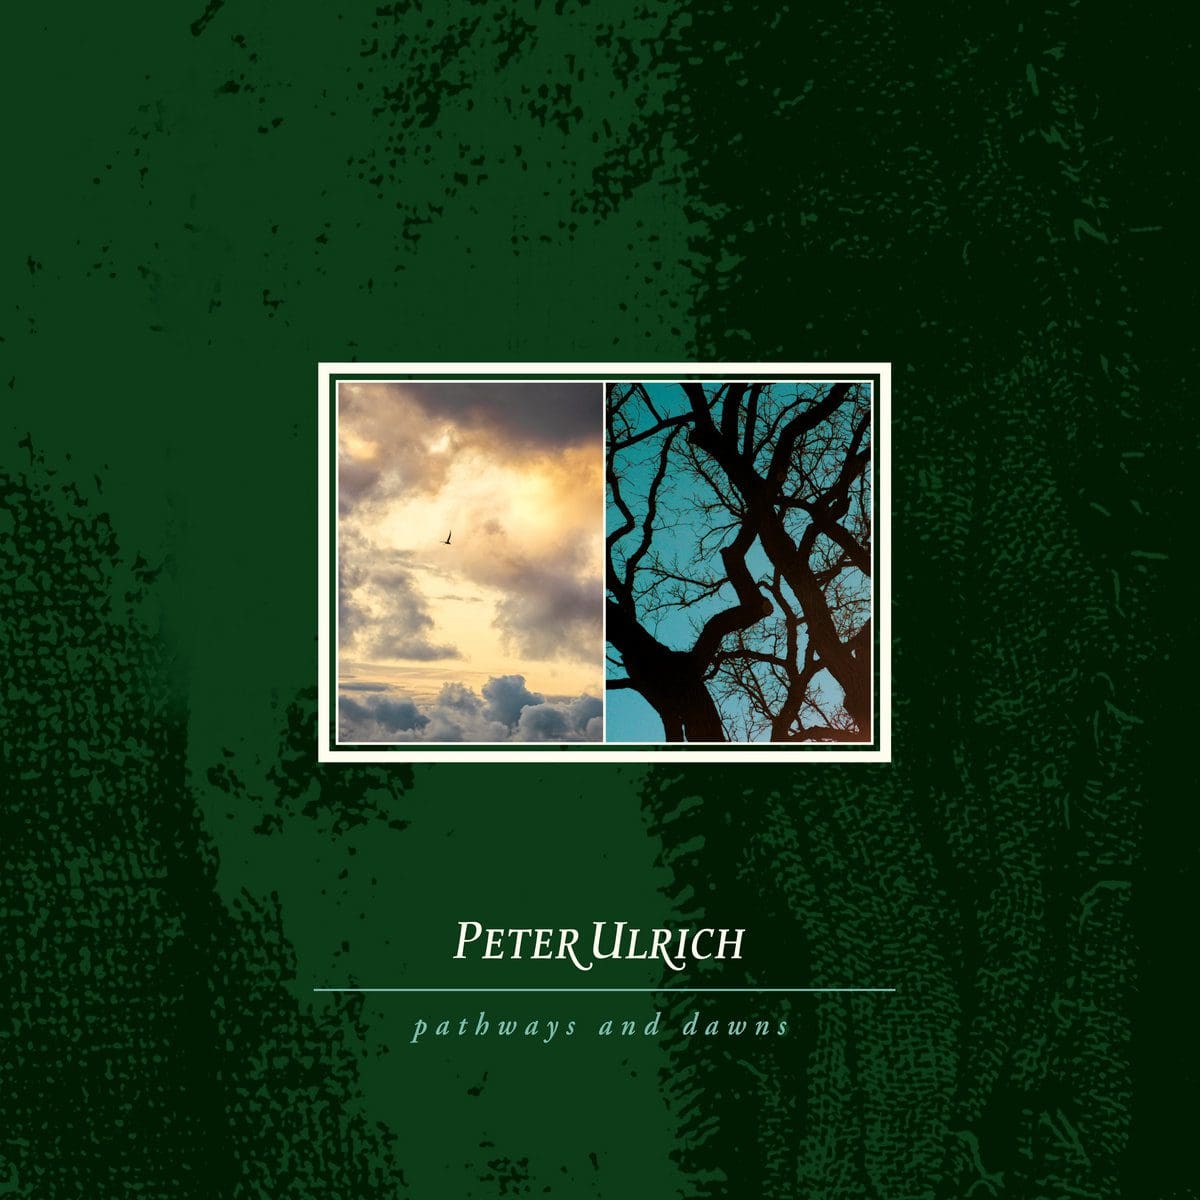 Debut solo album Peter Ulrich re-released on vinyl